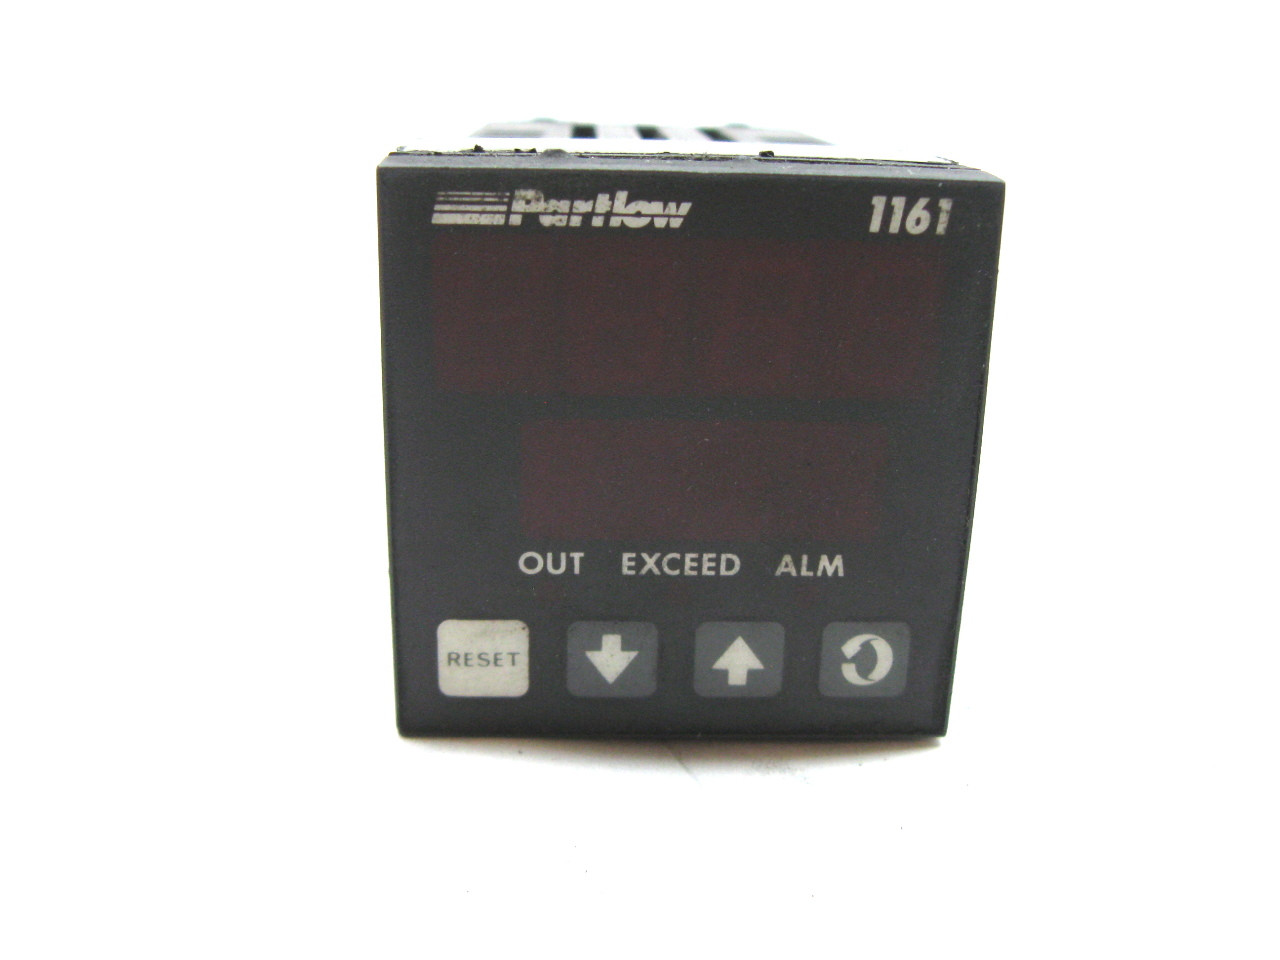 Partlow N6702 1161 Temperature Controller 120-240 Vac Z210000